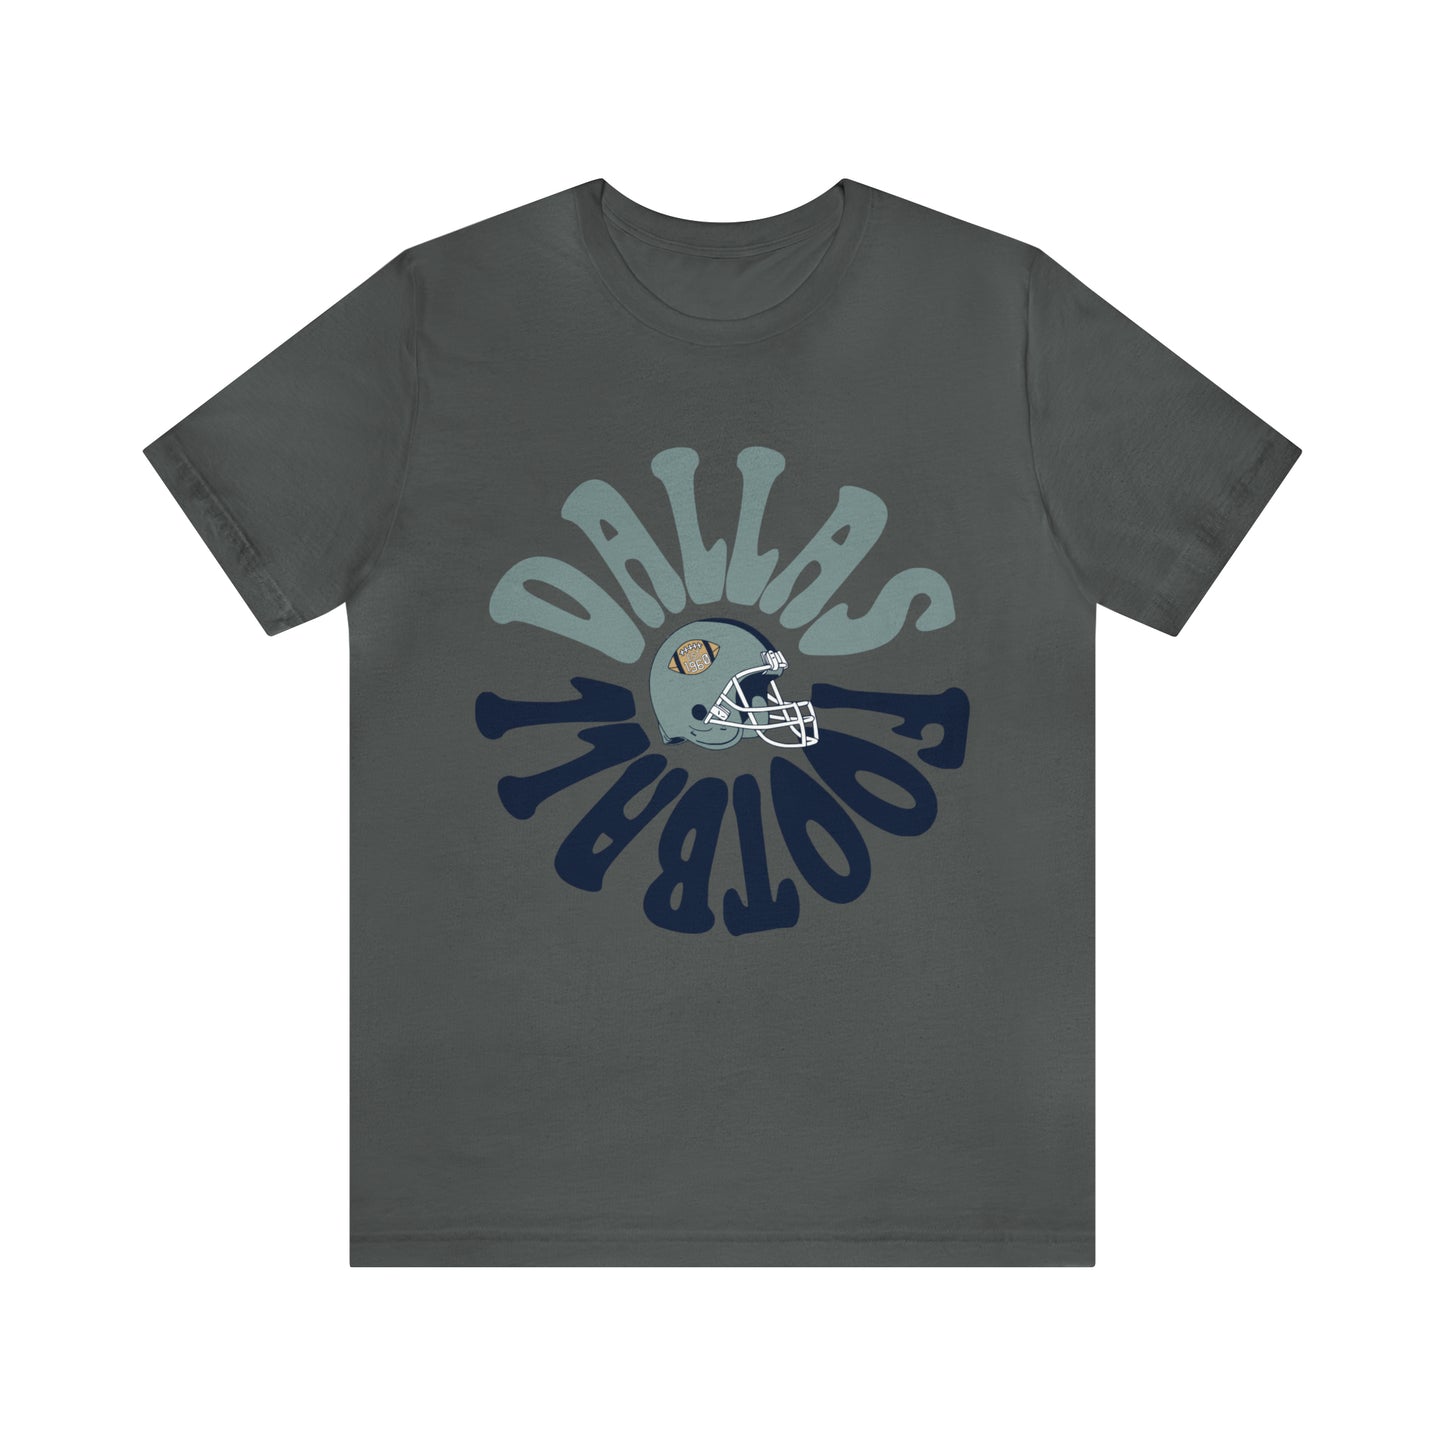 Hippy Dallas Cowboys Football Tee - Vintage Football T-Shirt - Short Sleeve Oversized Men's & Women's Unisex Apparel - Design 2